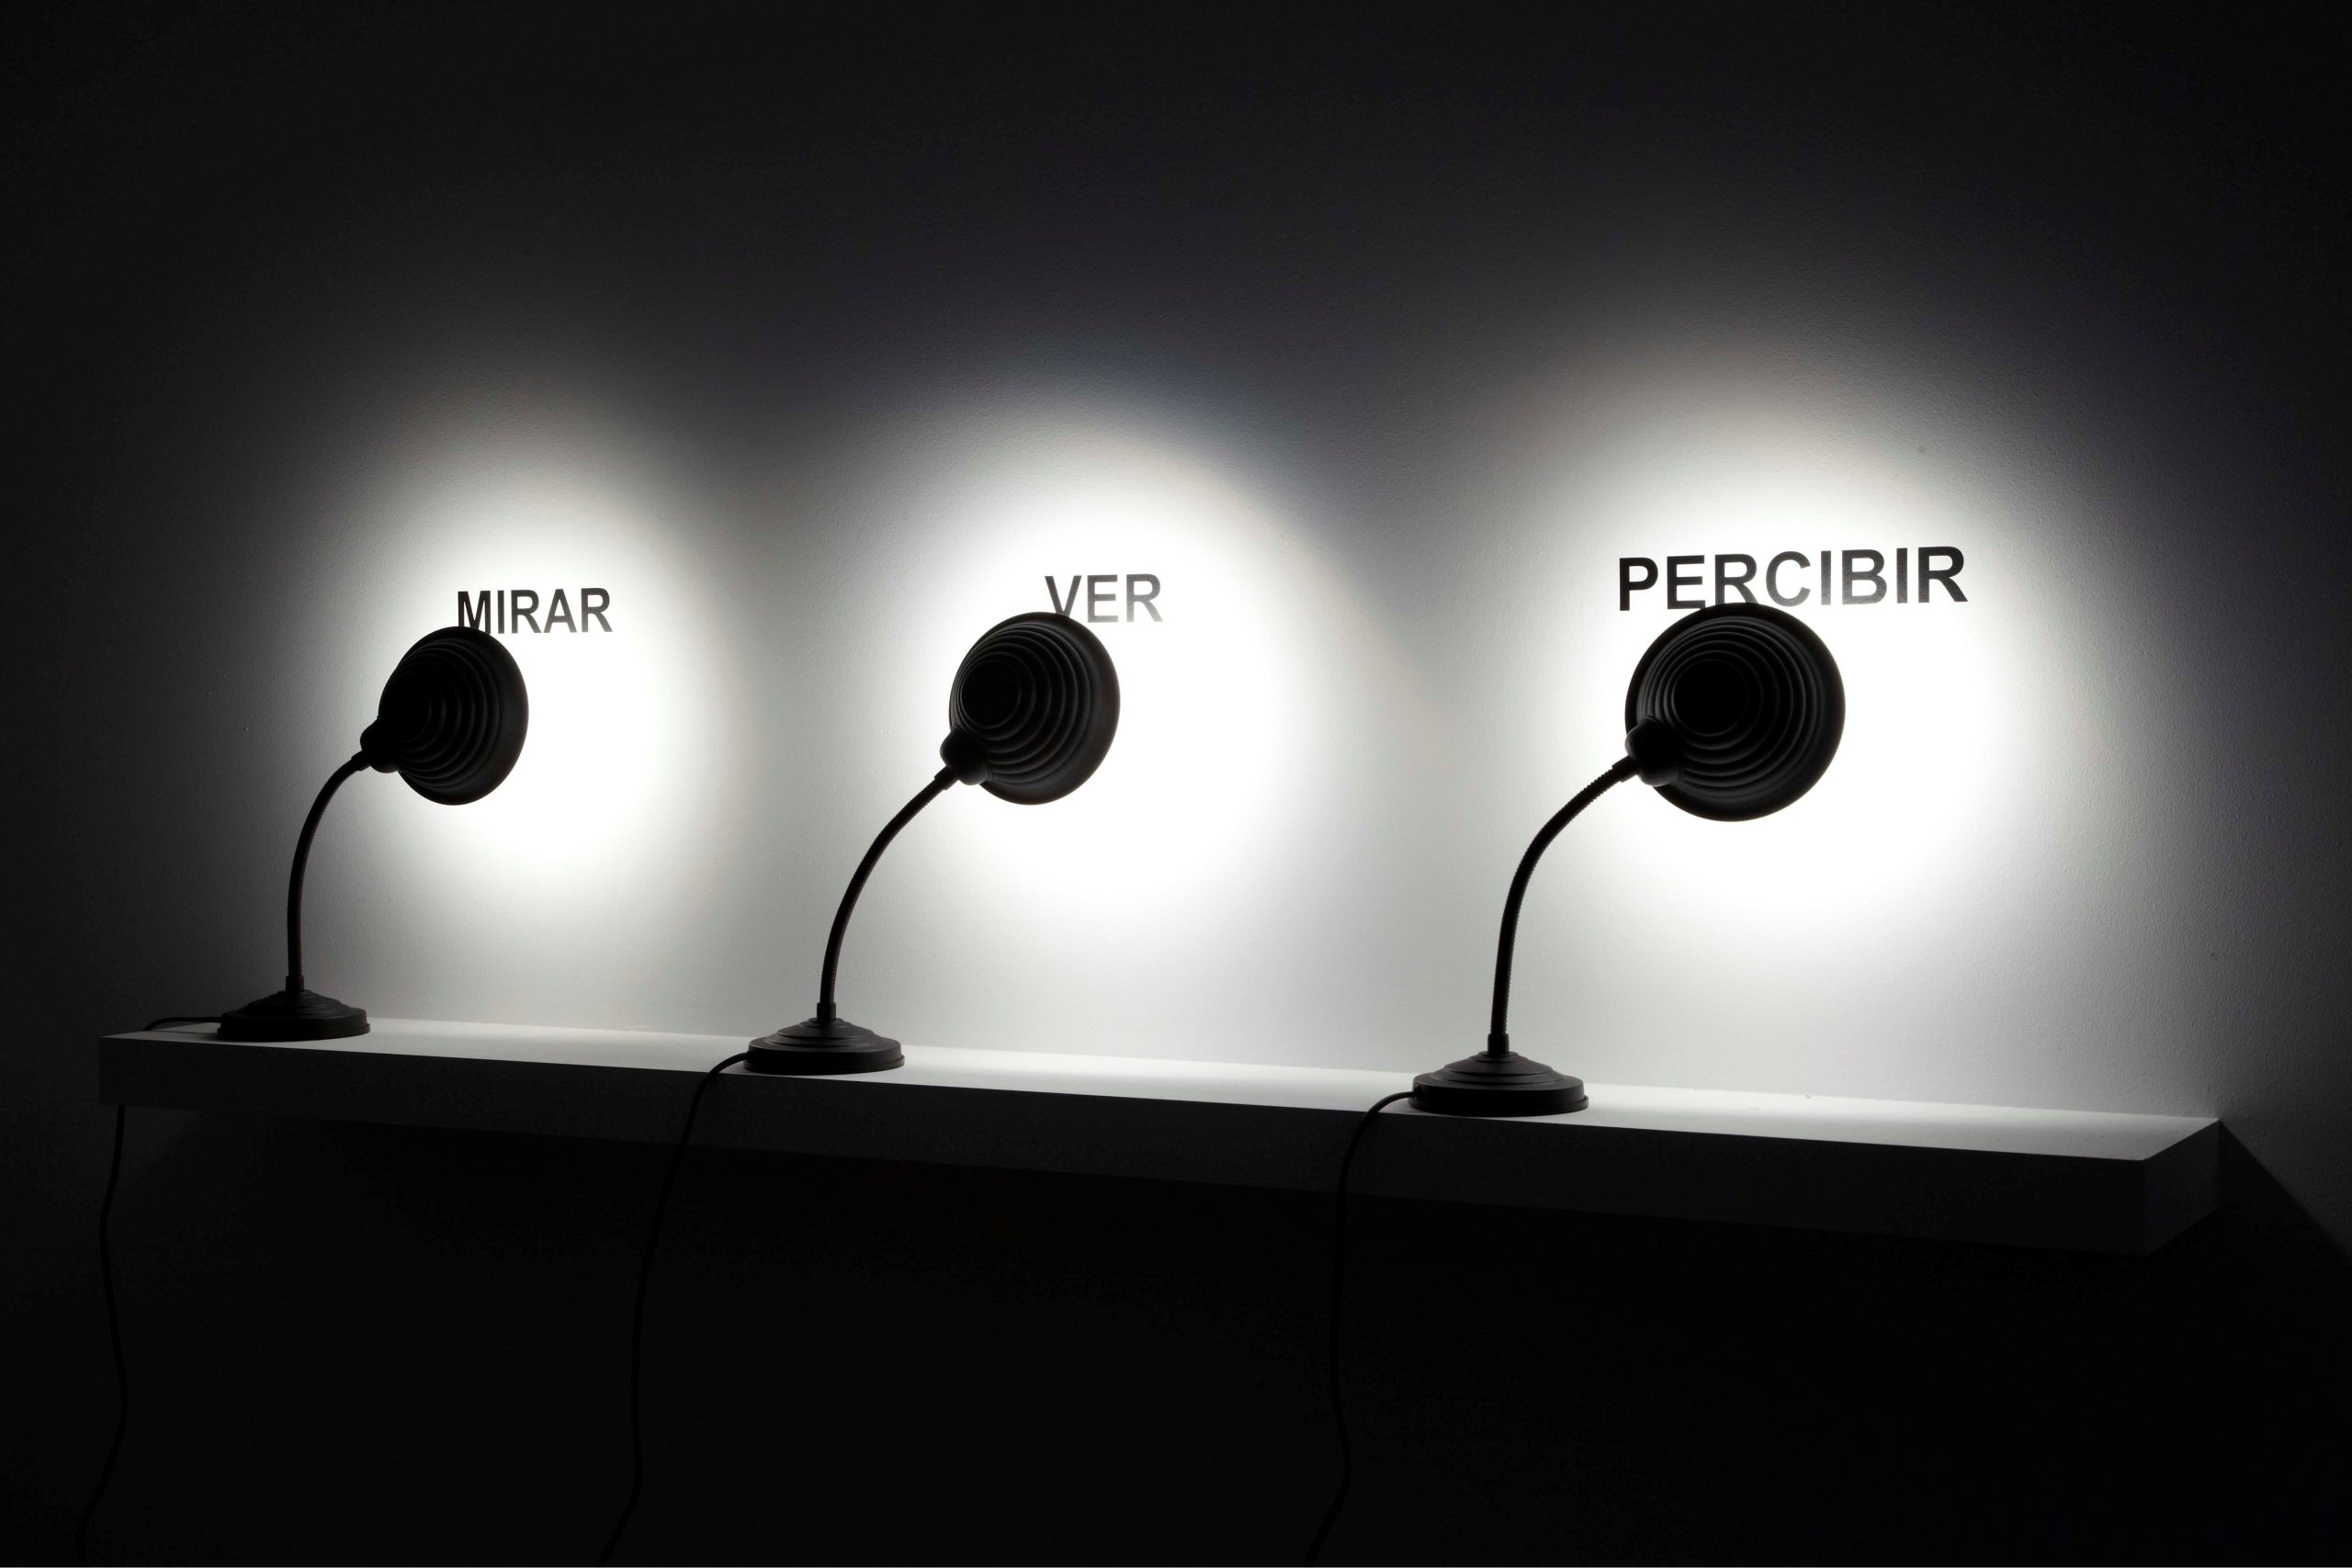 Antoni Muntadas Look See Perceive, 2009, Installation Desk lamps, cut vinyl graphics, white shelve, Edition 6 +2AP, USD 10,001 – 25,000 @ Vanguard Gallery